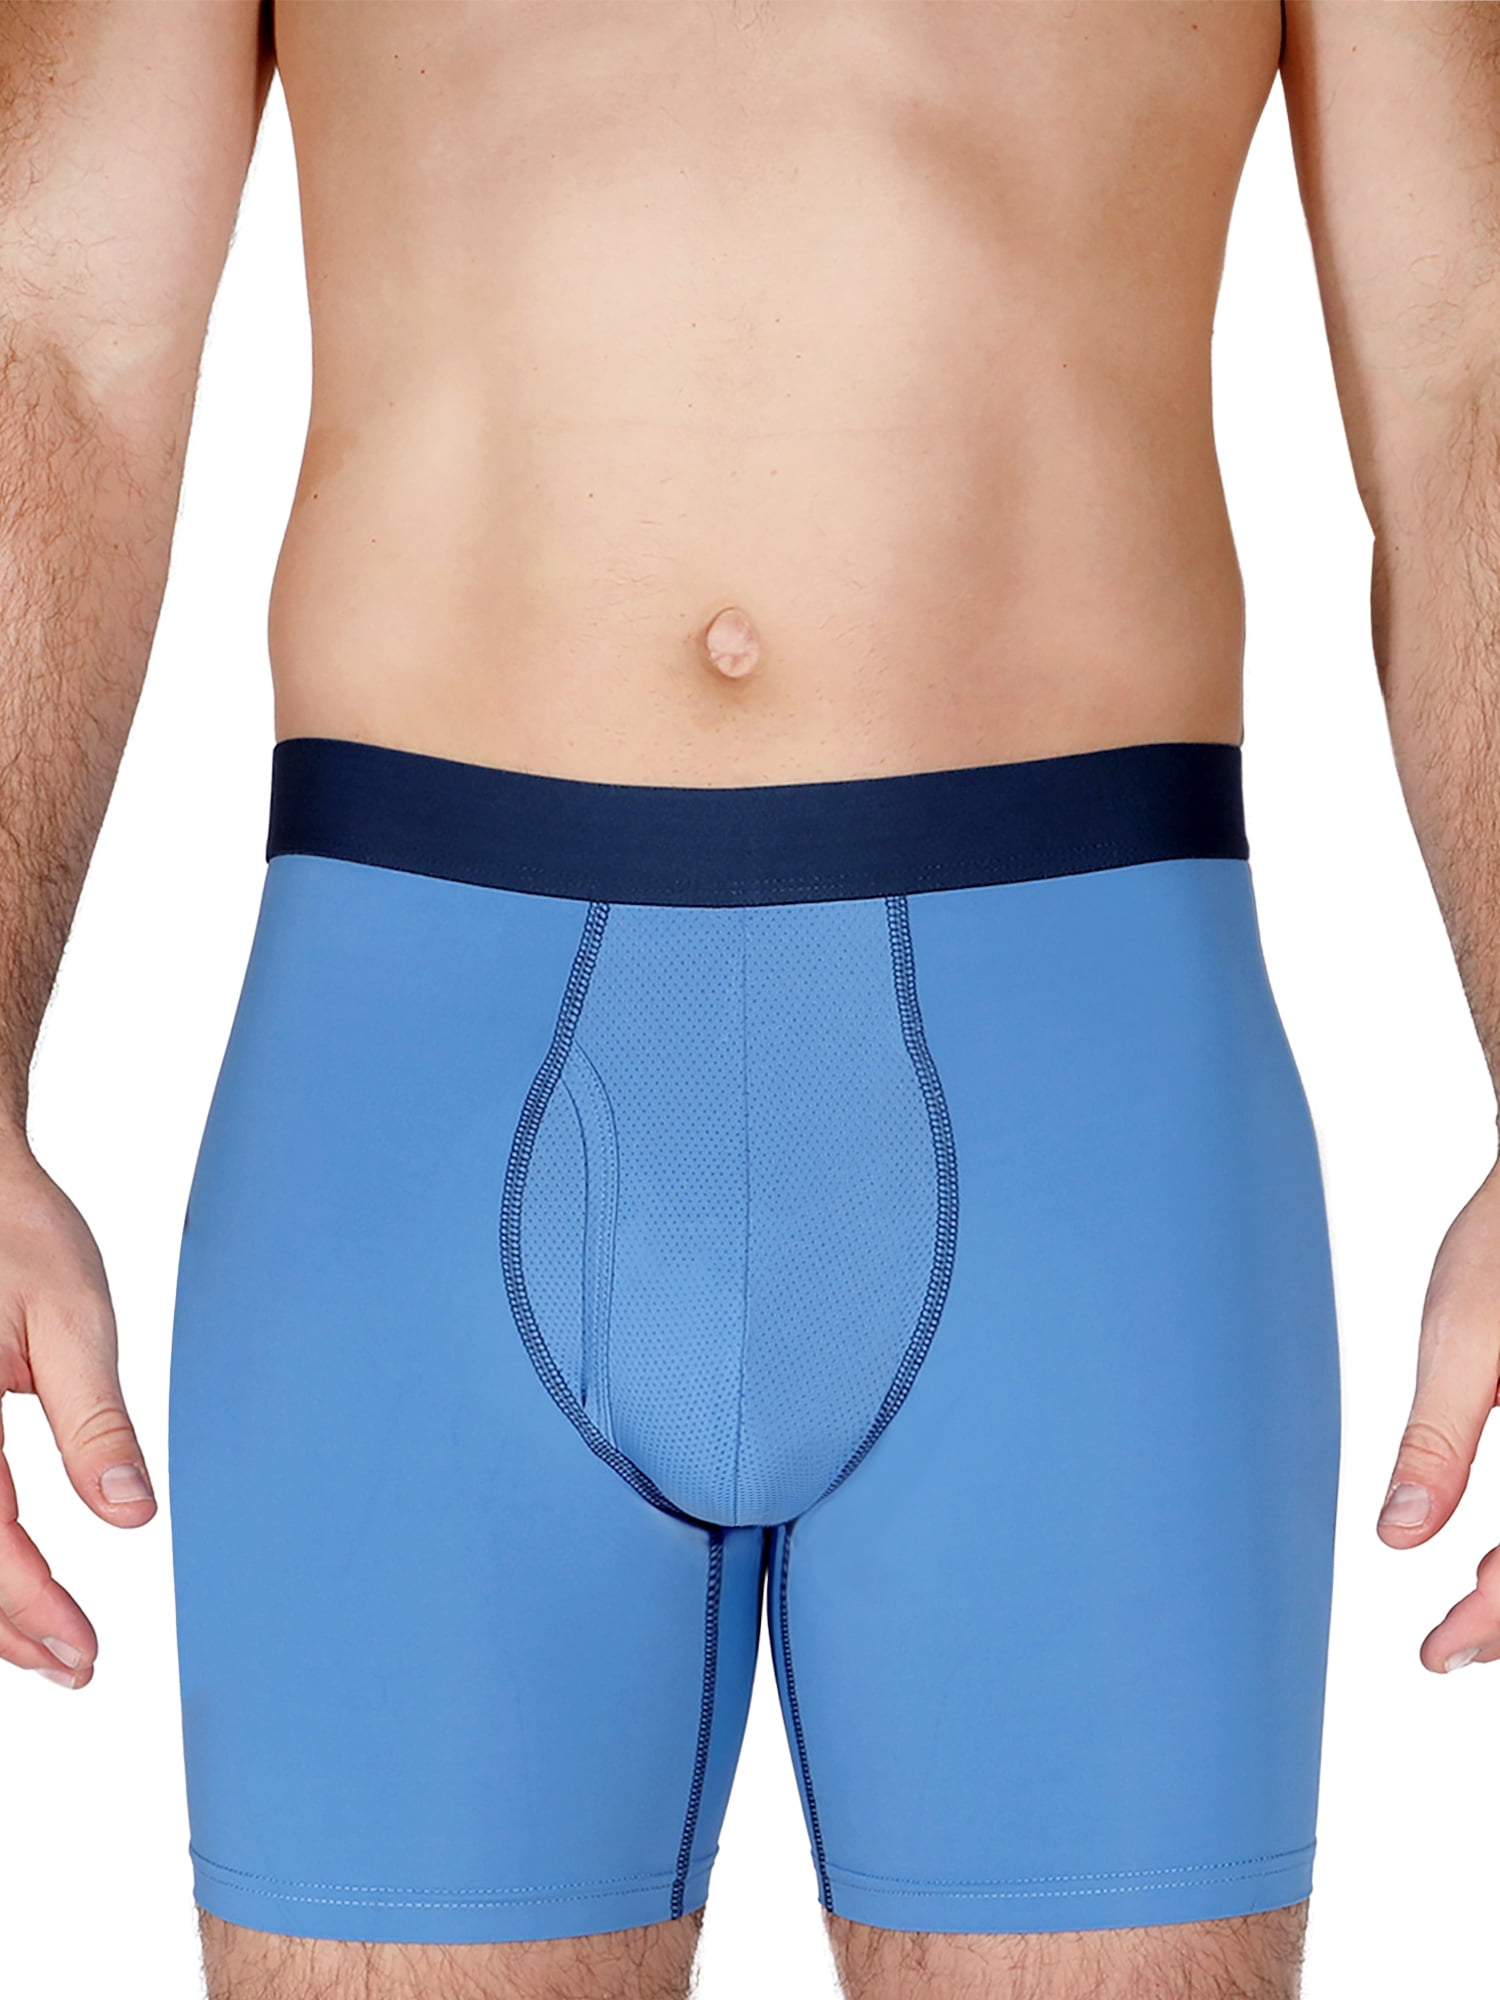 Part 1.5 Underwear From Walmart Review: Athletic Works (Mens Underwear  Review) 